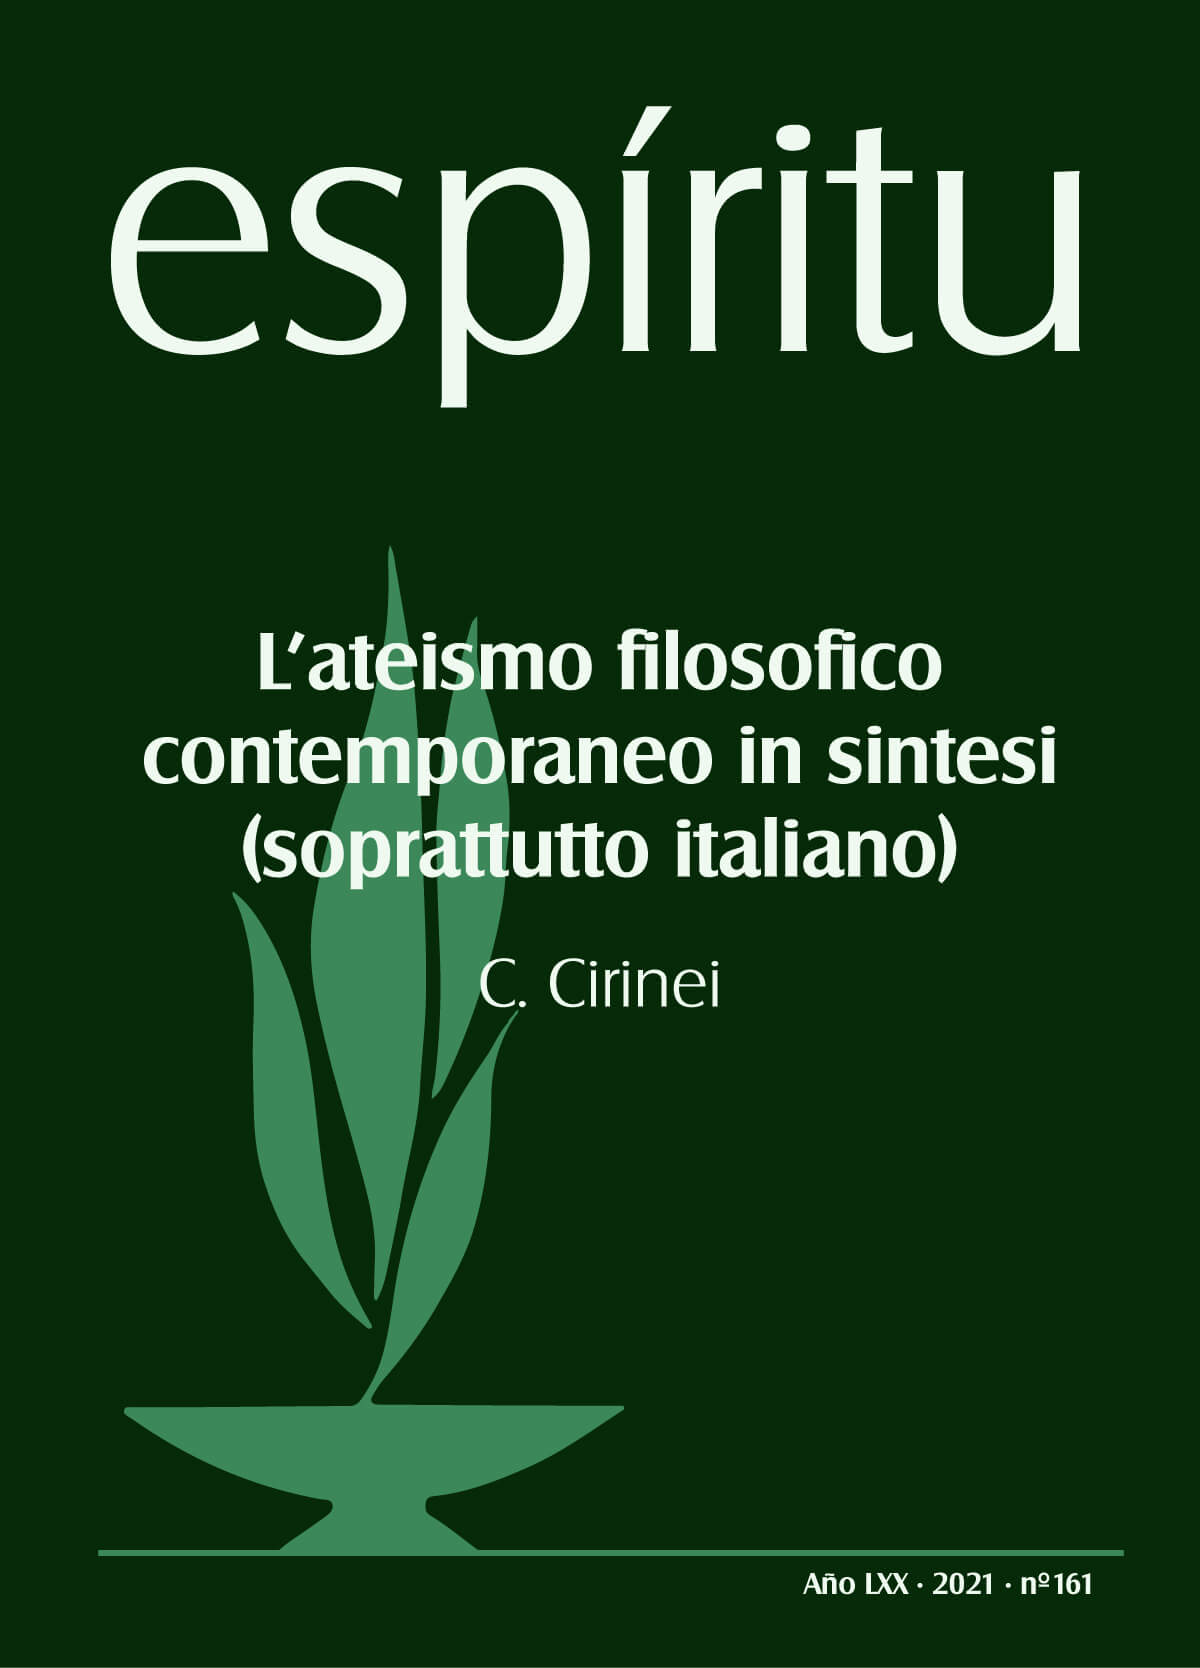 C. CIRINEI, Contemporary philosophical atheism in synthesis (especially Italian)